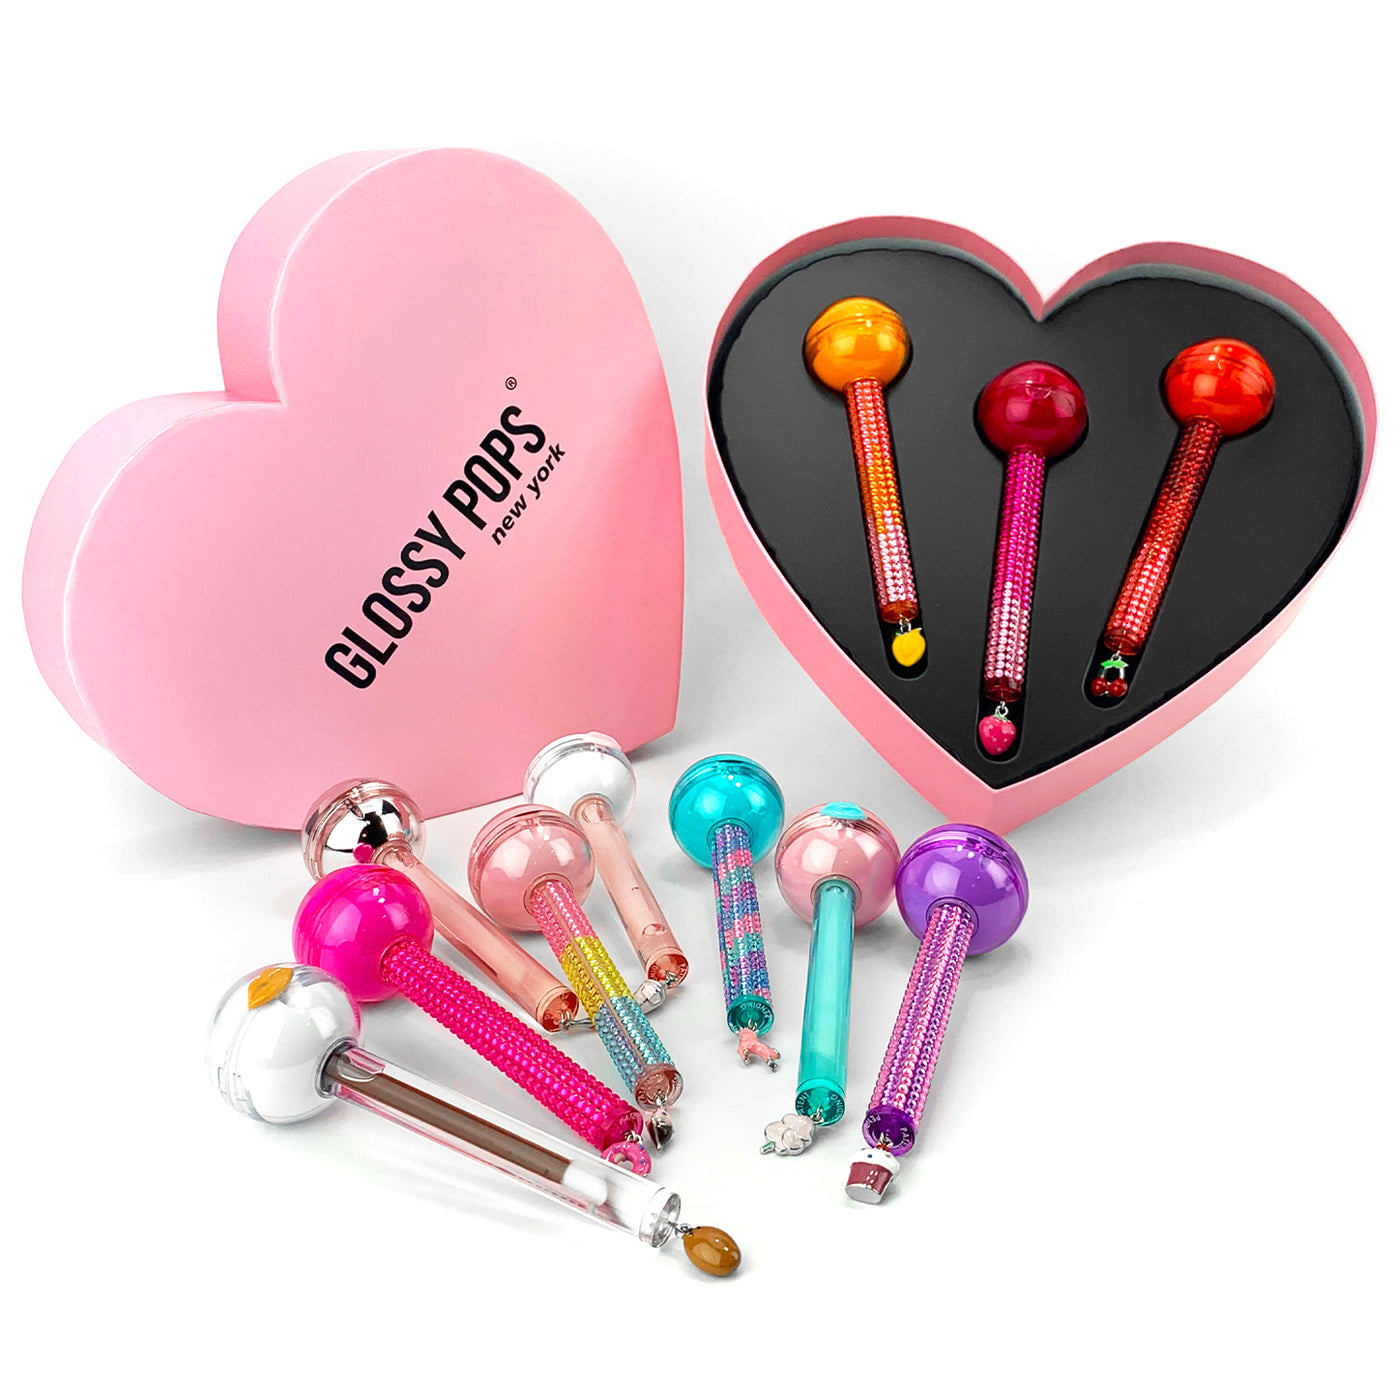 Glossy Pops -  heart shaped box - custom gift set with three lip balm and lip gloss duos